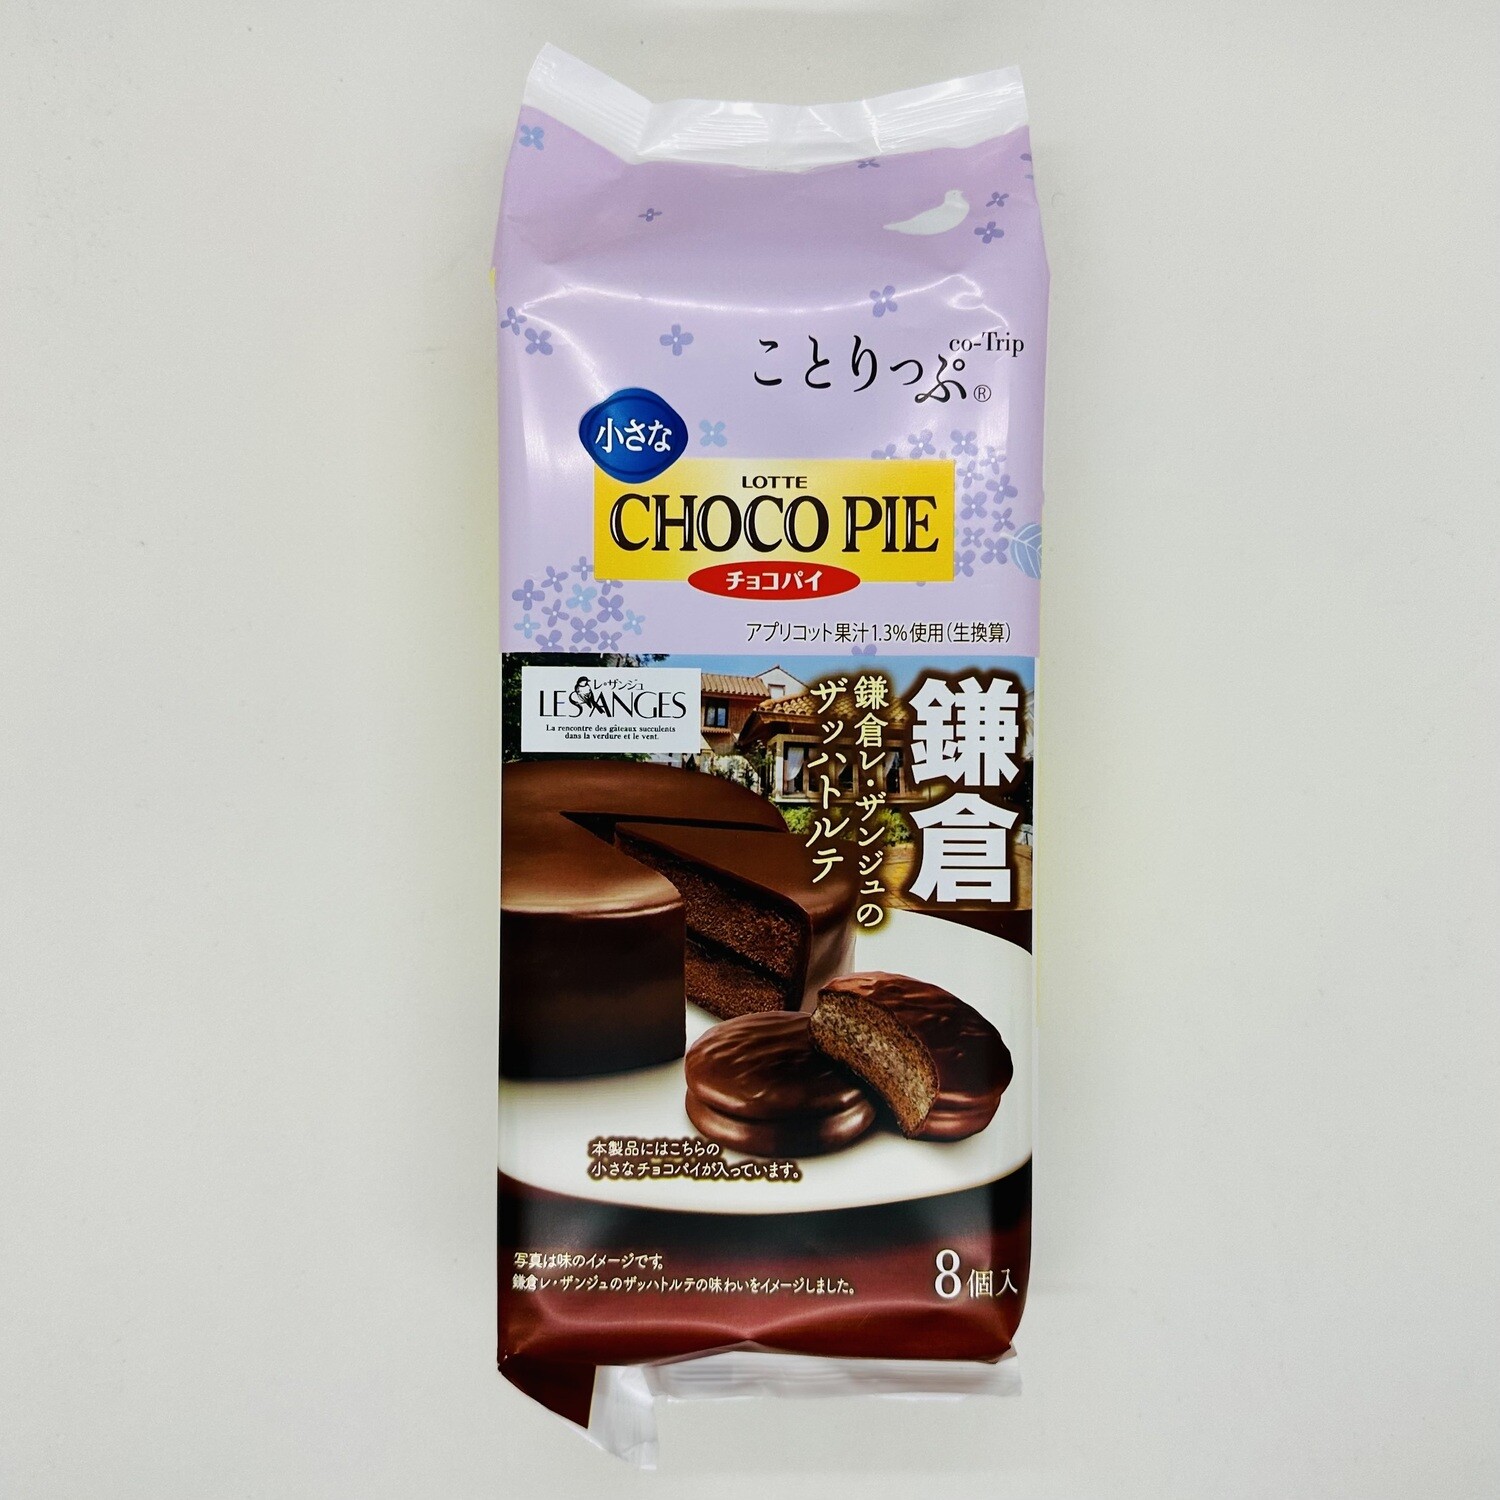 Lotte Choco Pie Mini